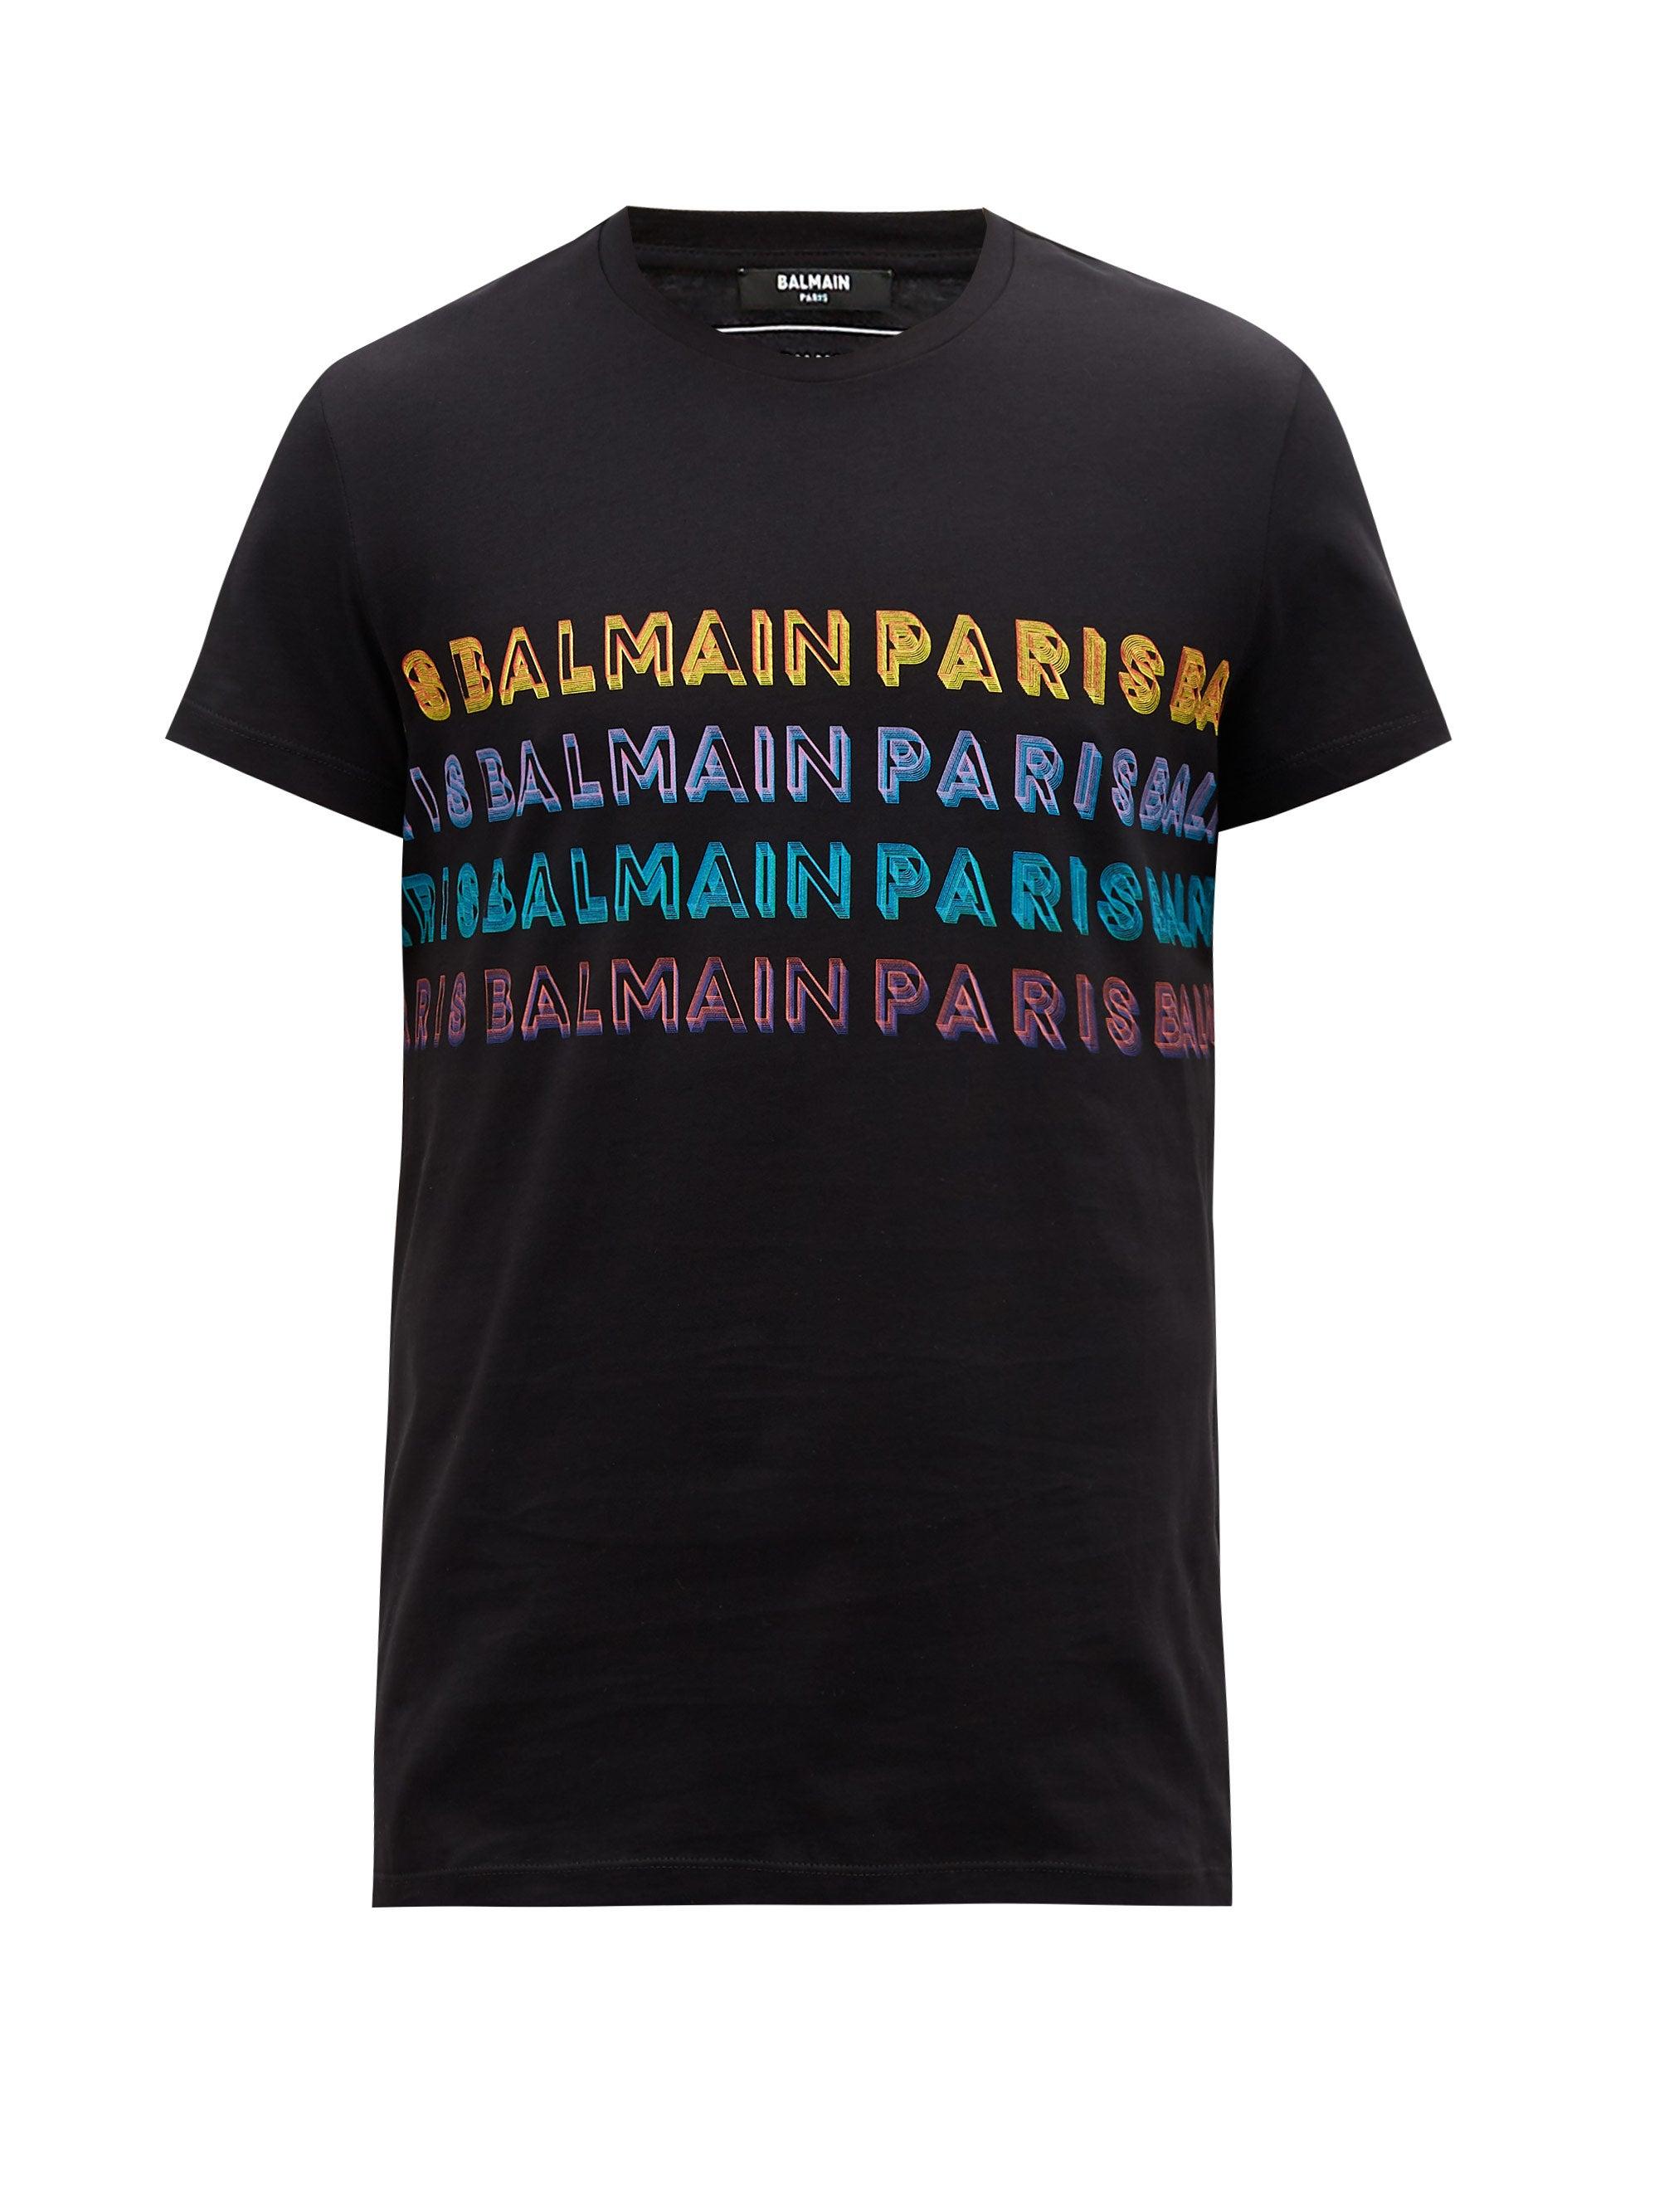 Balmain Rainbow Logo-print Cotton T-shirt in Black for Men - Lyst